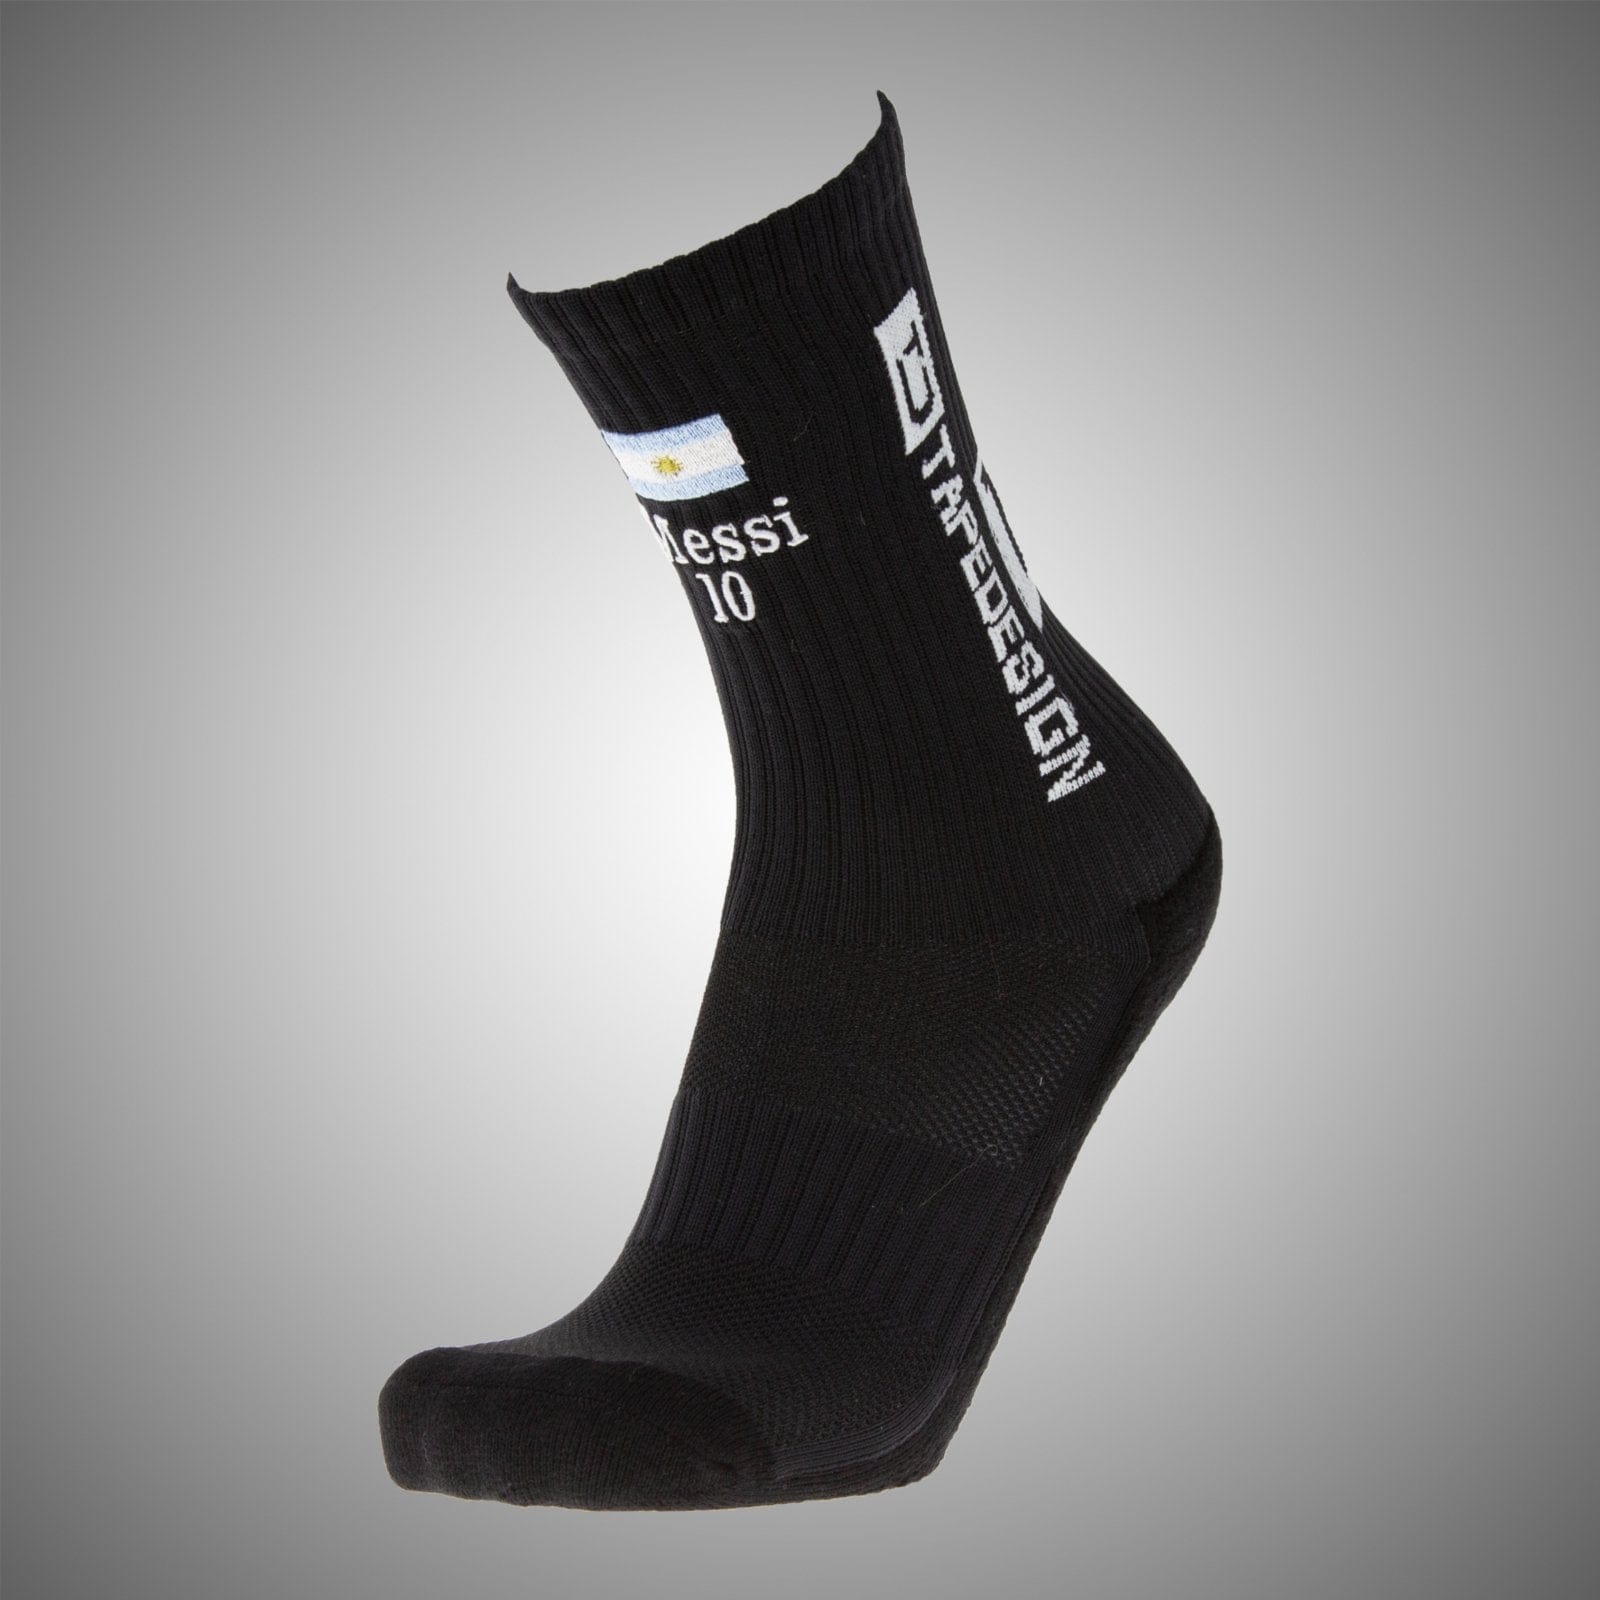 360Football Tapedesign ID Socken Personalisieren